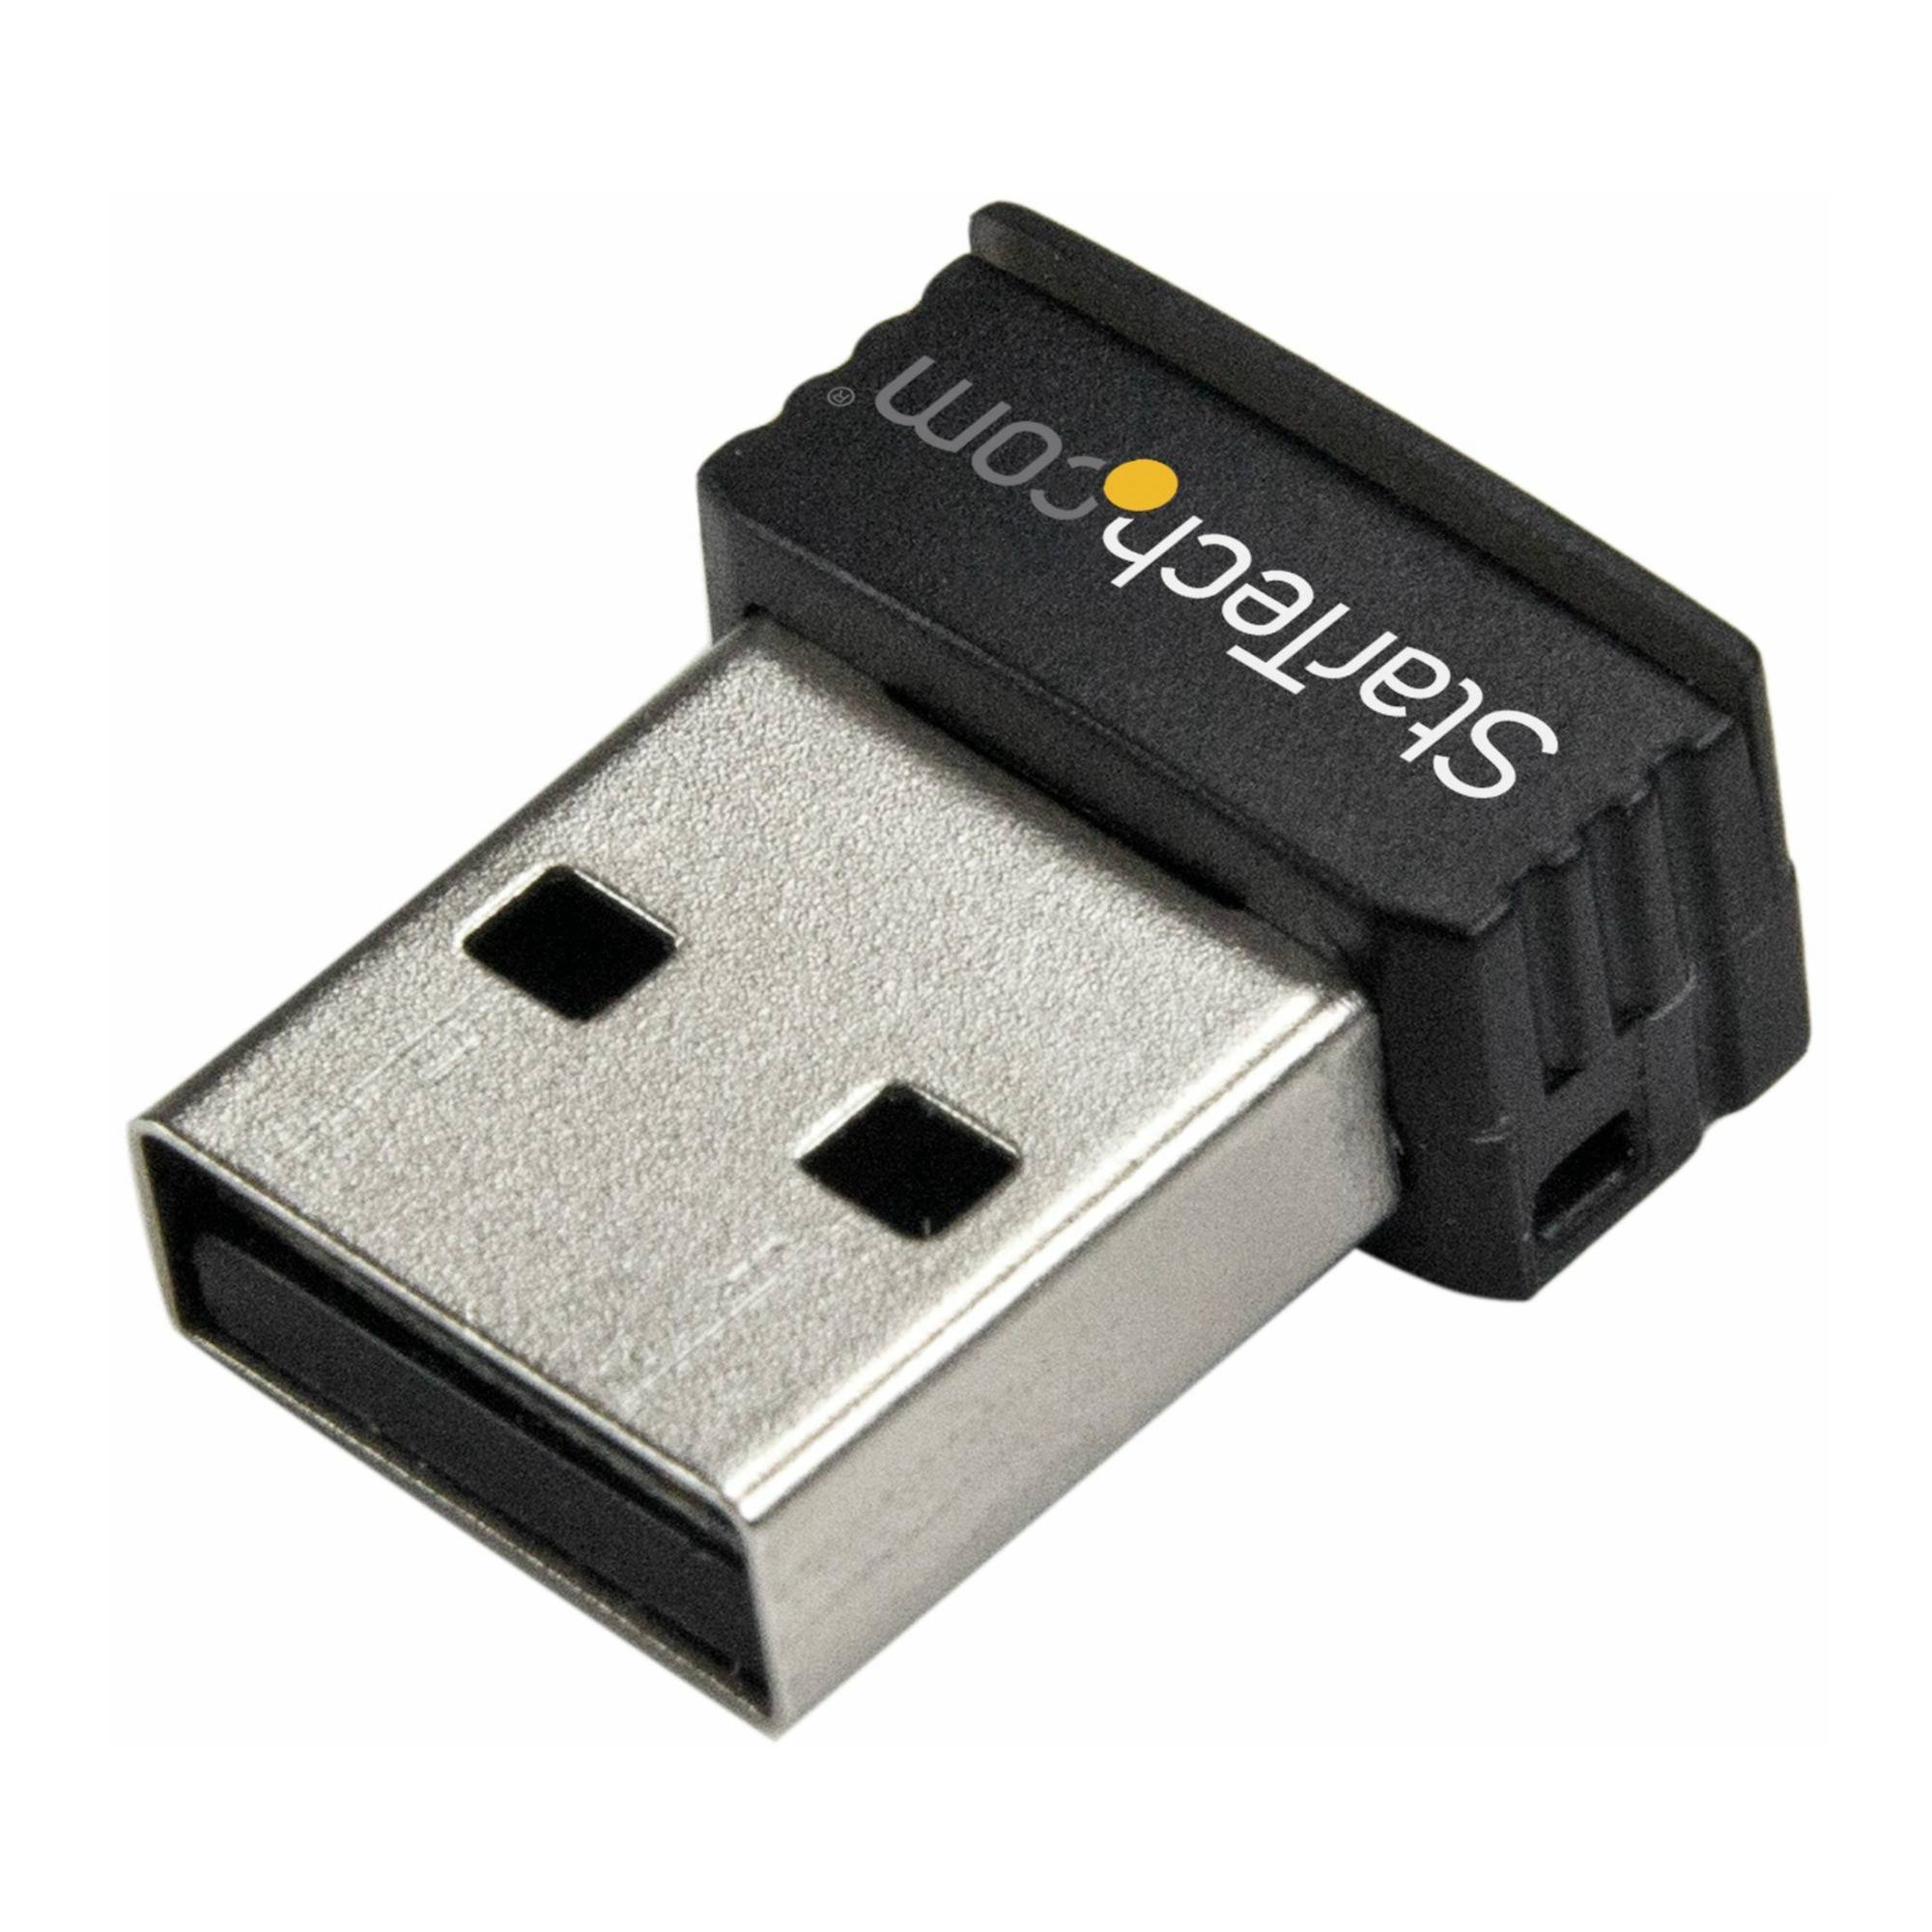 StarTech USB Wireless N Network Adapter